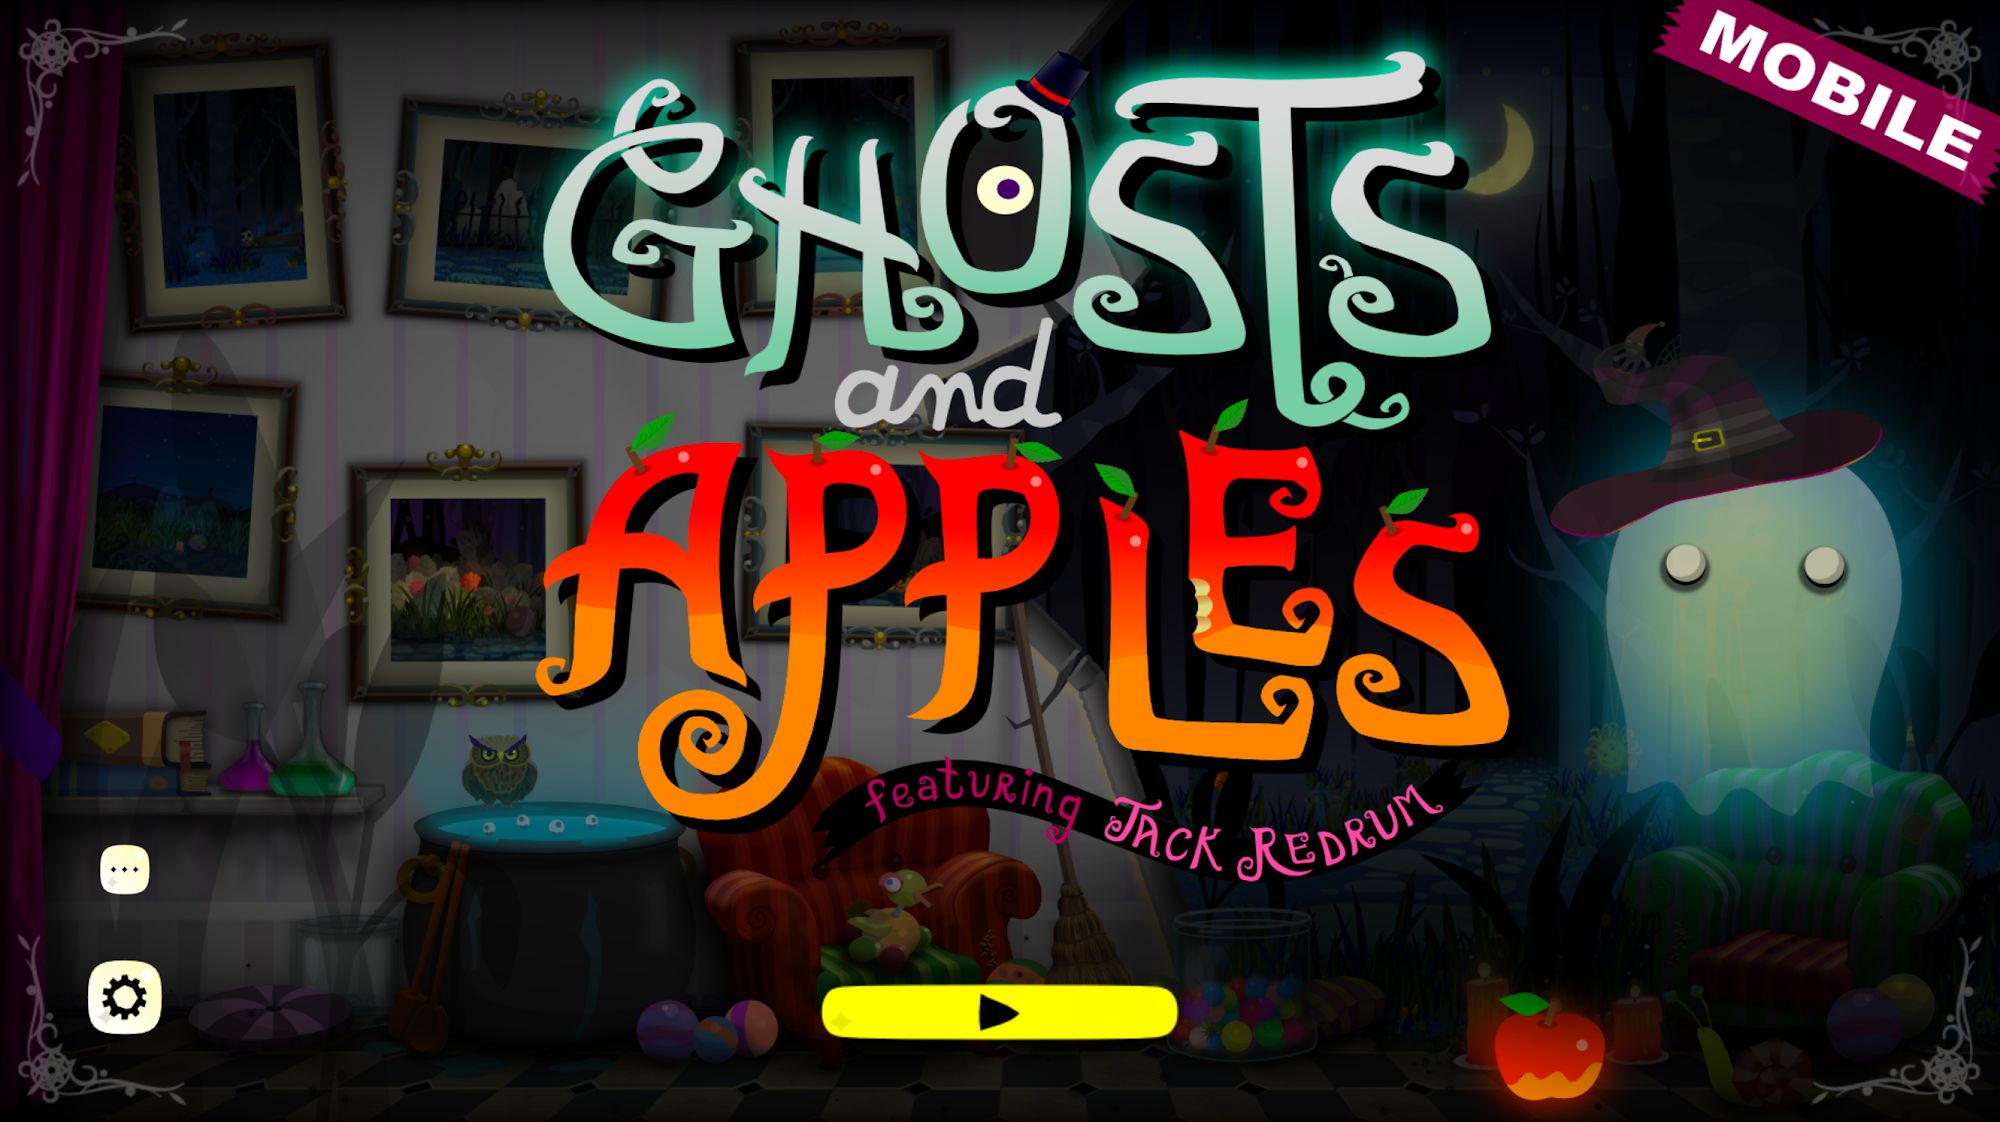 Скачать Ghosts and Apples Mobile: Android Аркады игра на телефон и планшет.